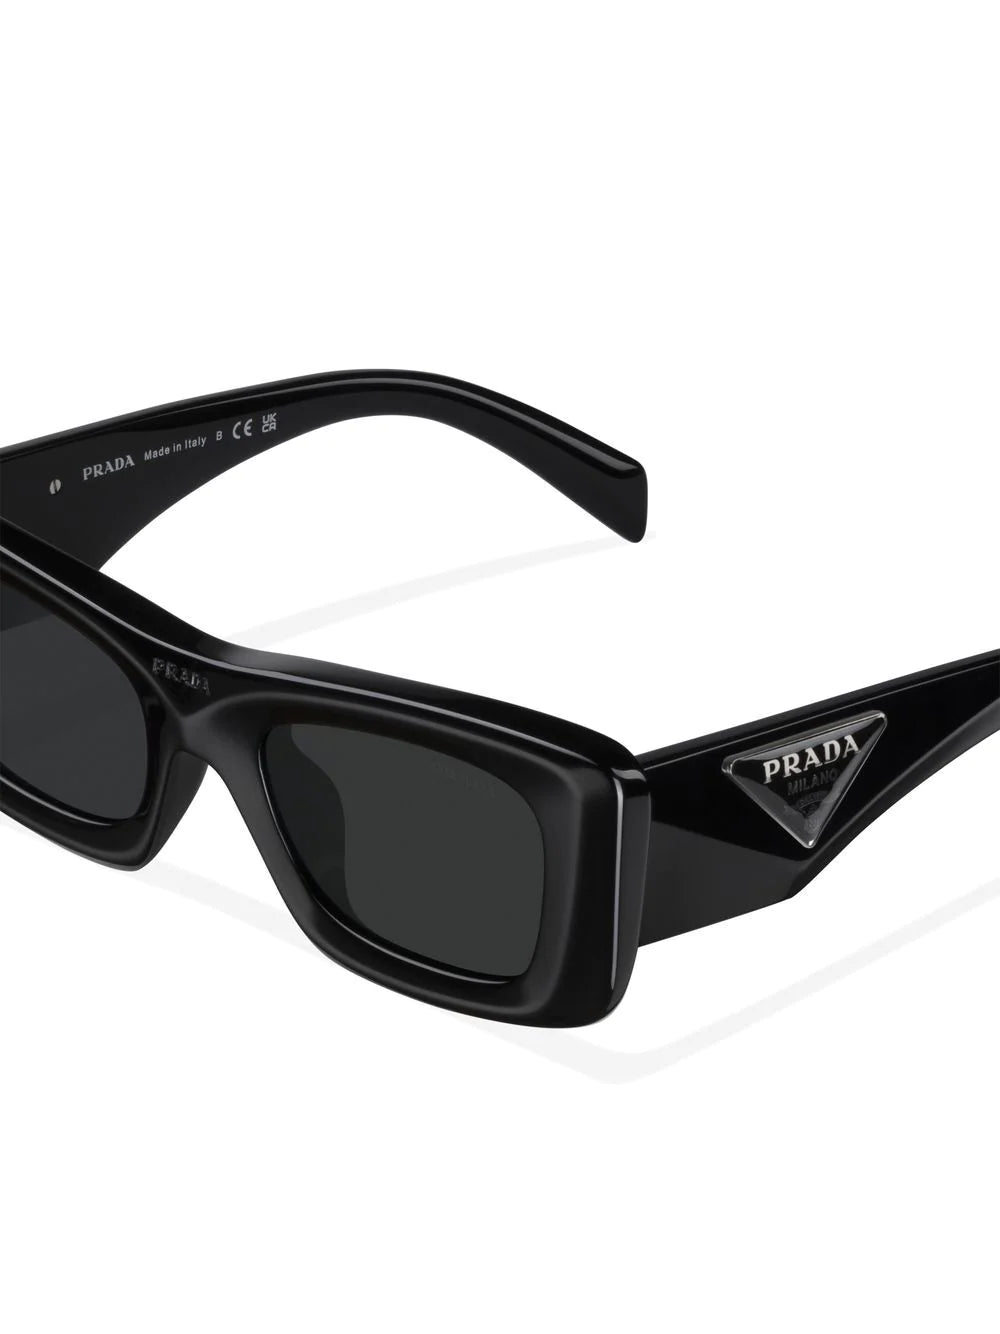 Prada men's sunglasses online | The sunny accessory | ZALANDO